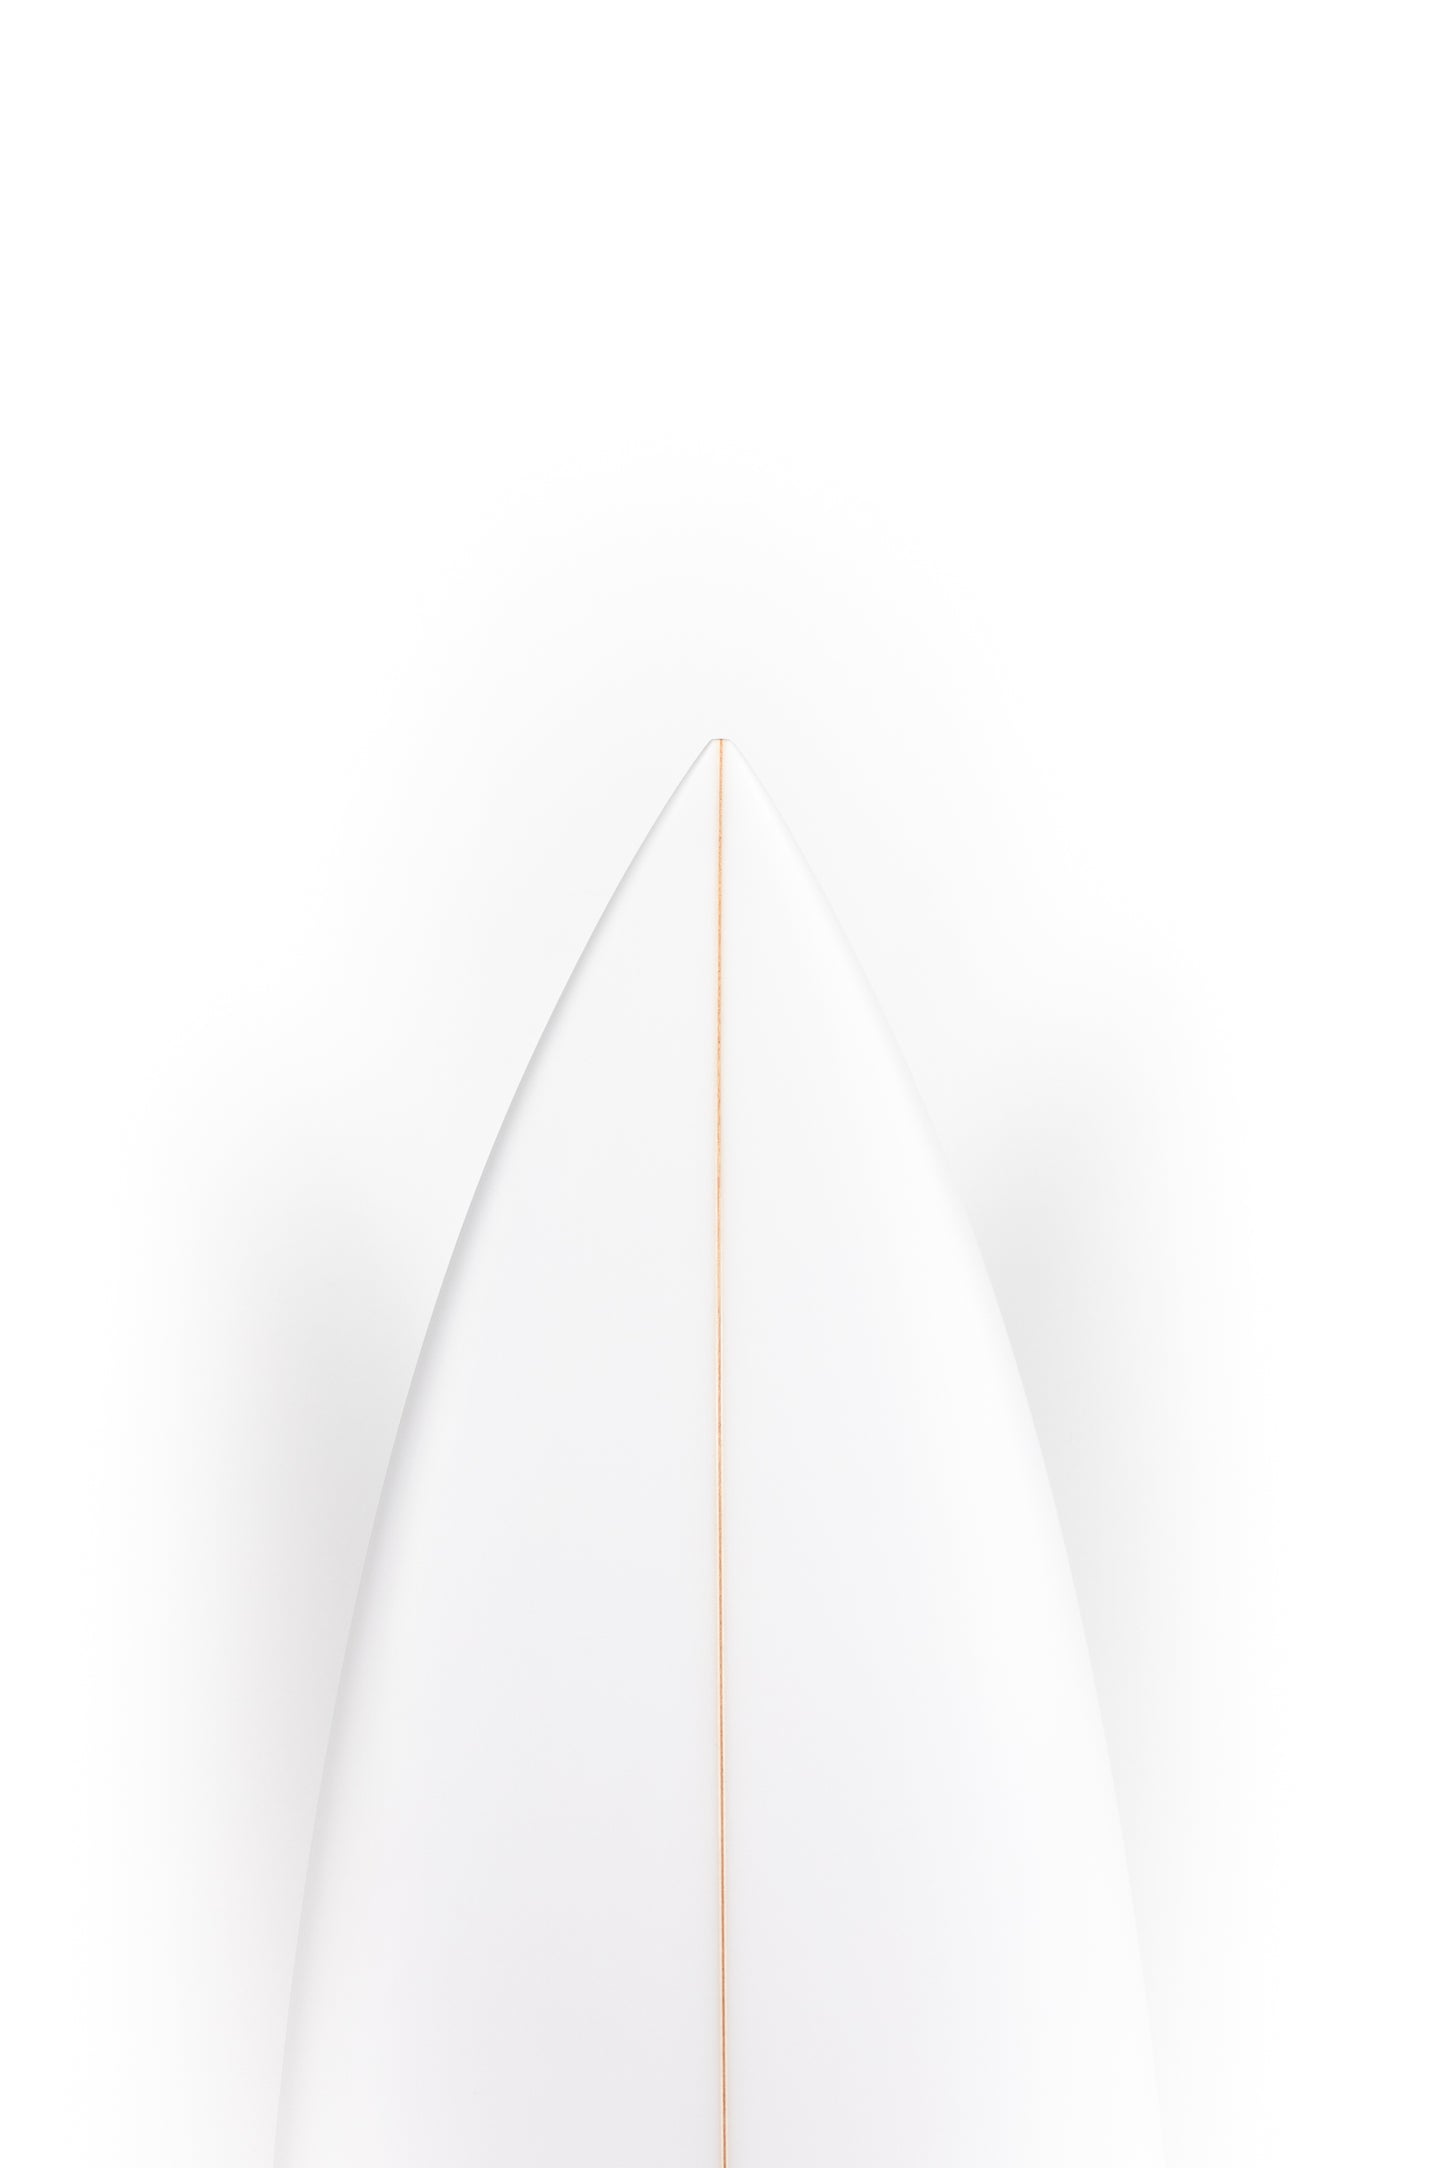 
                  
                    Pukas Surf Shop - Channel Islands - CI PRO by Britt Merrick - 6'2" x 19 1/2 x 2 9/16 - 32.8L - CI25318
                  
                